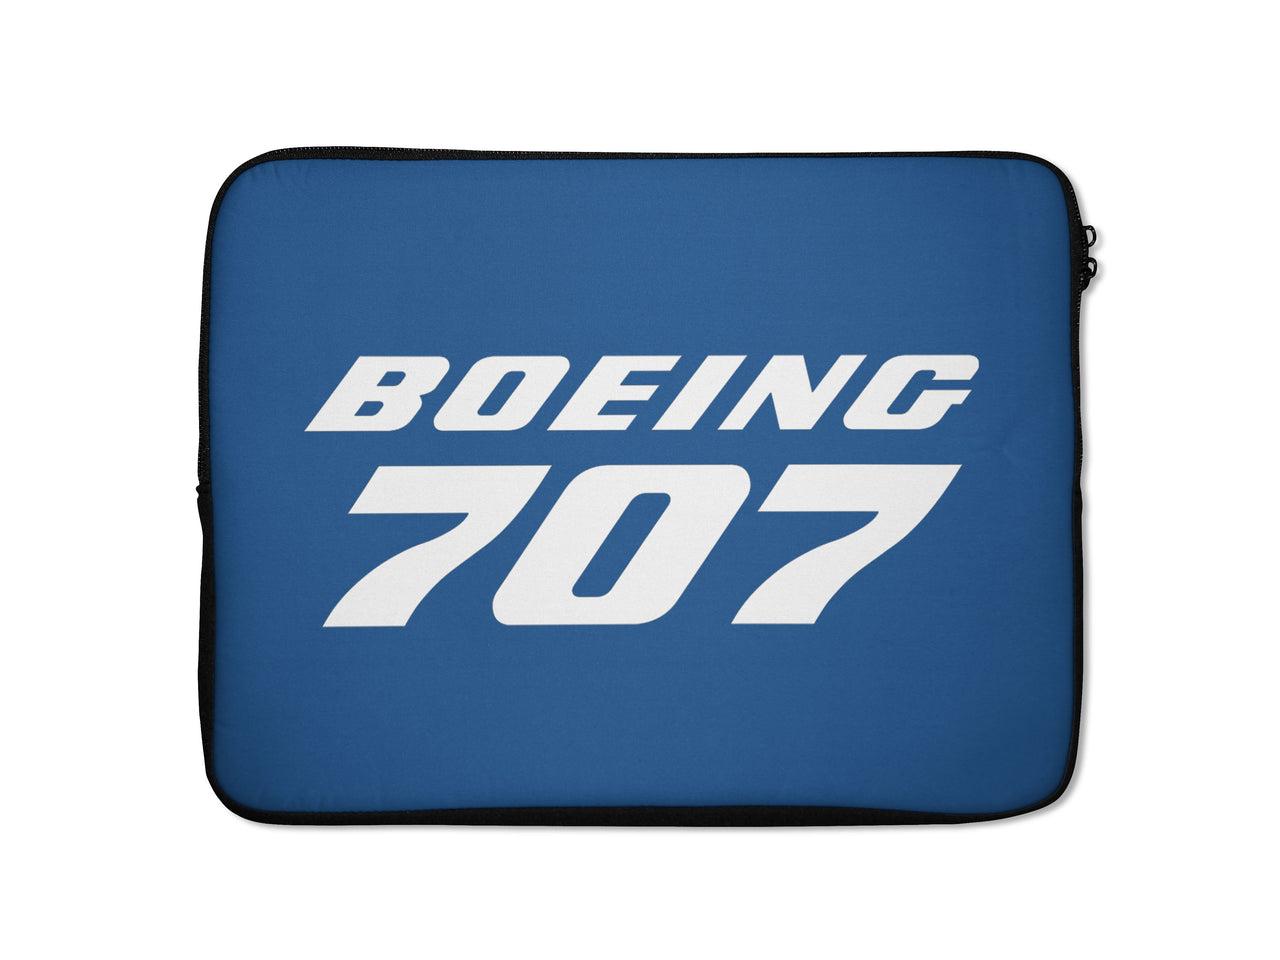 Boeing 707 & Text Designed Laptop & Tablet Cases